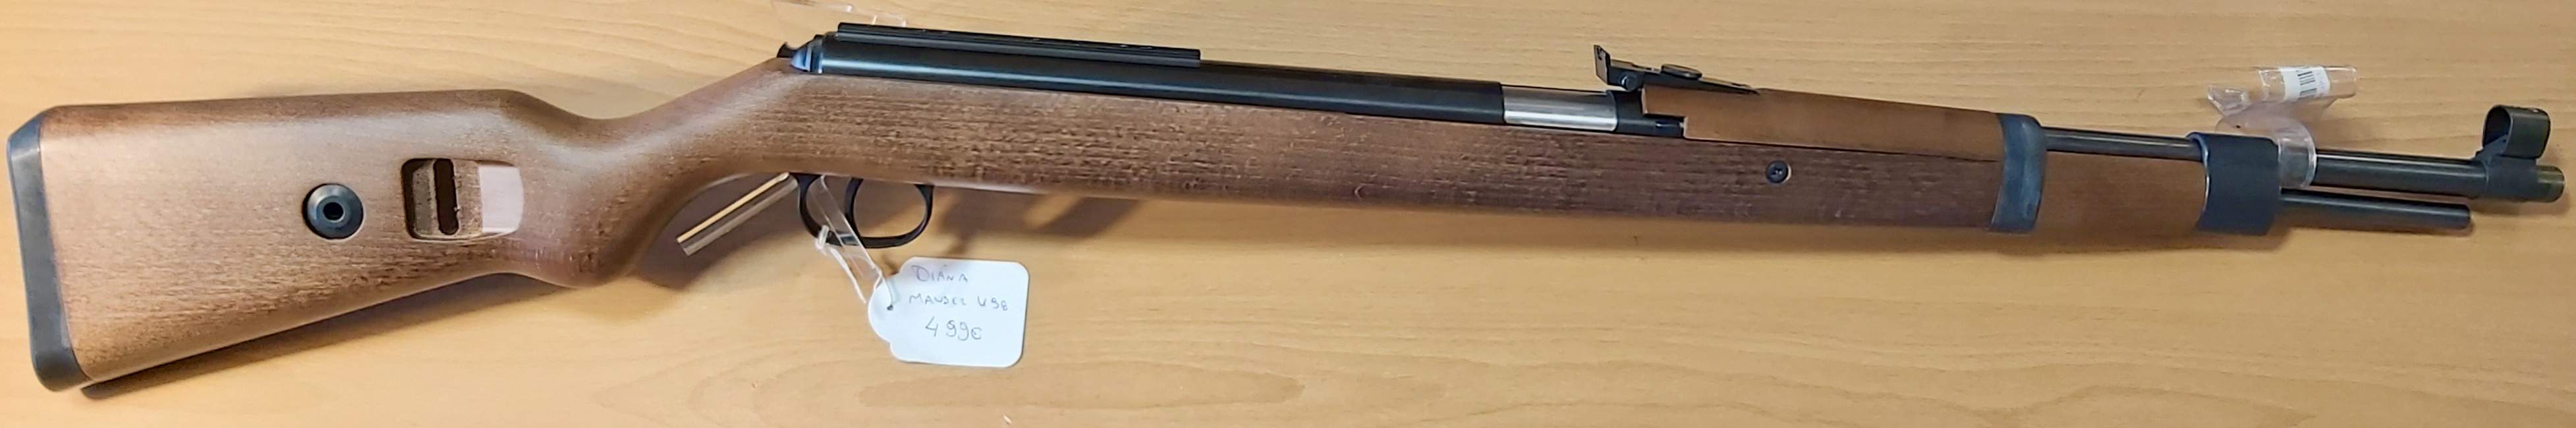 Diana mauser K98, 5,5mm, 499€